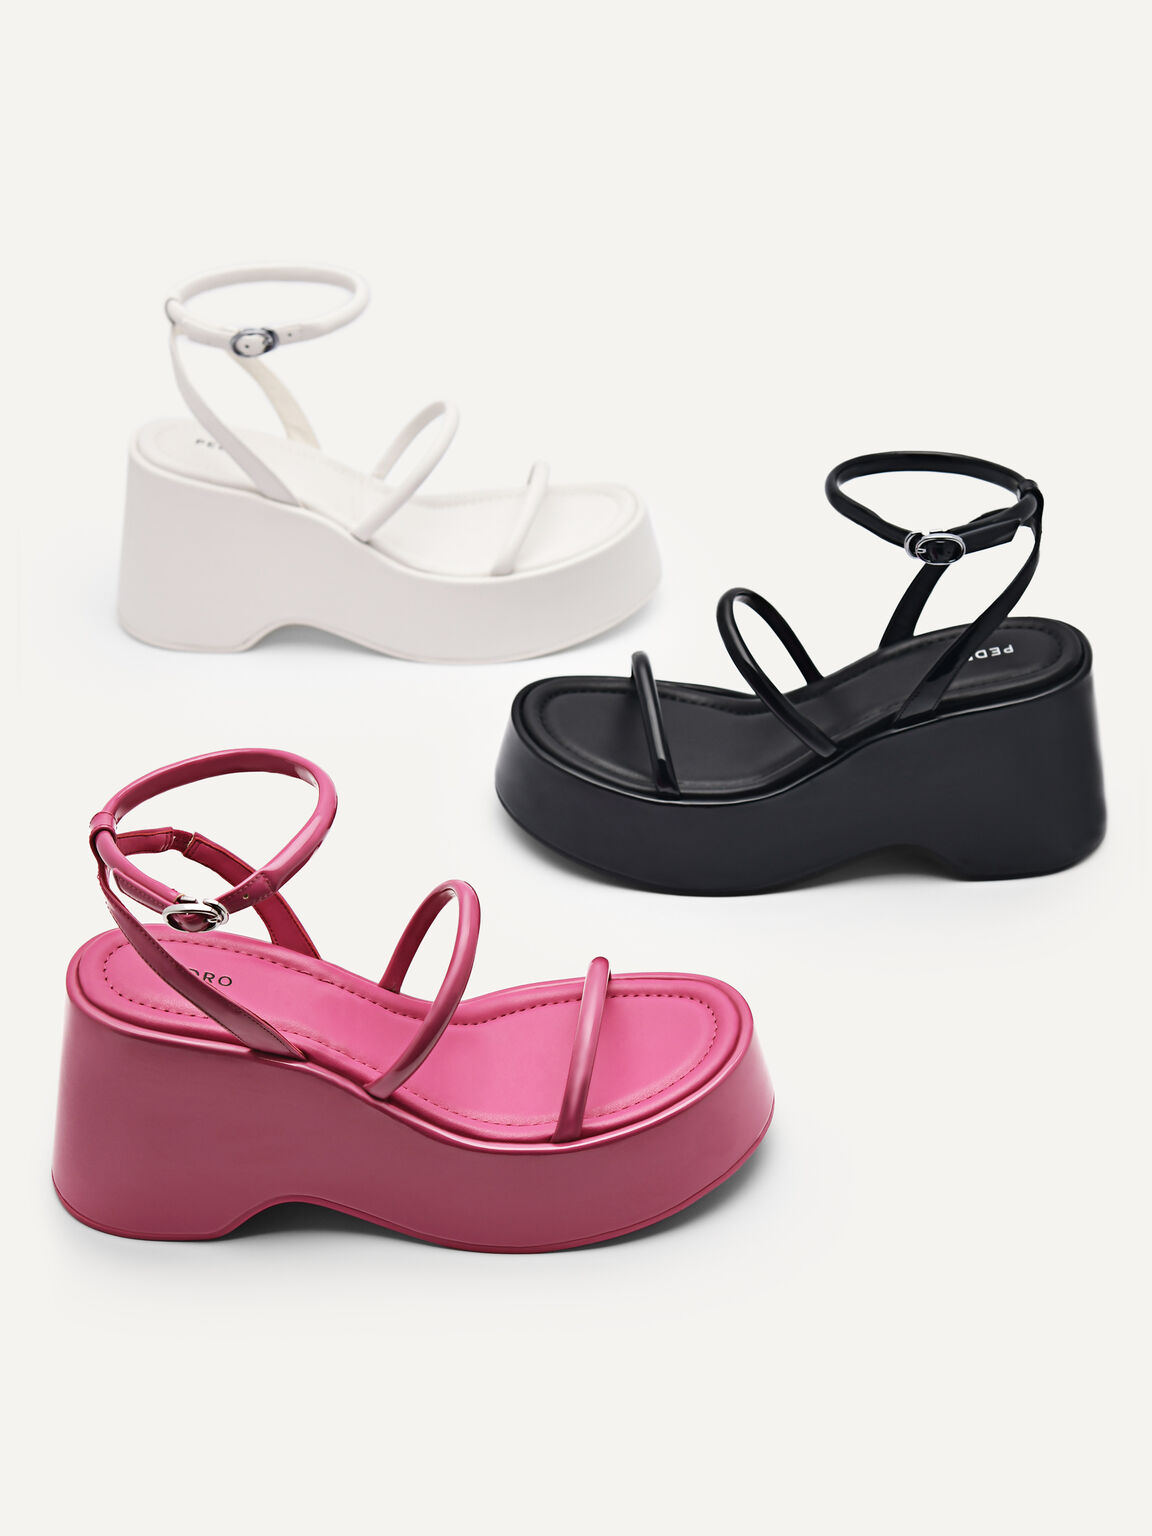 Aryna Platform Sandals, Black, hi-res